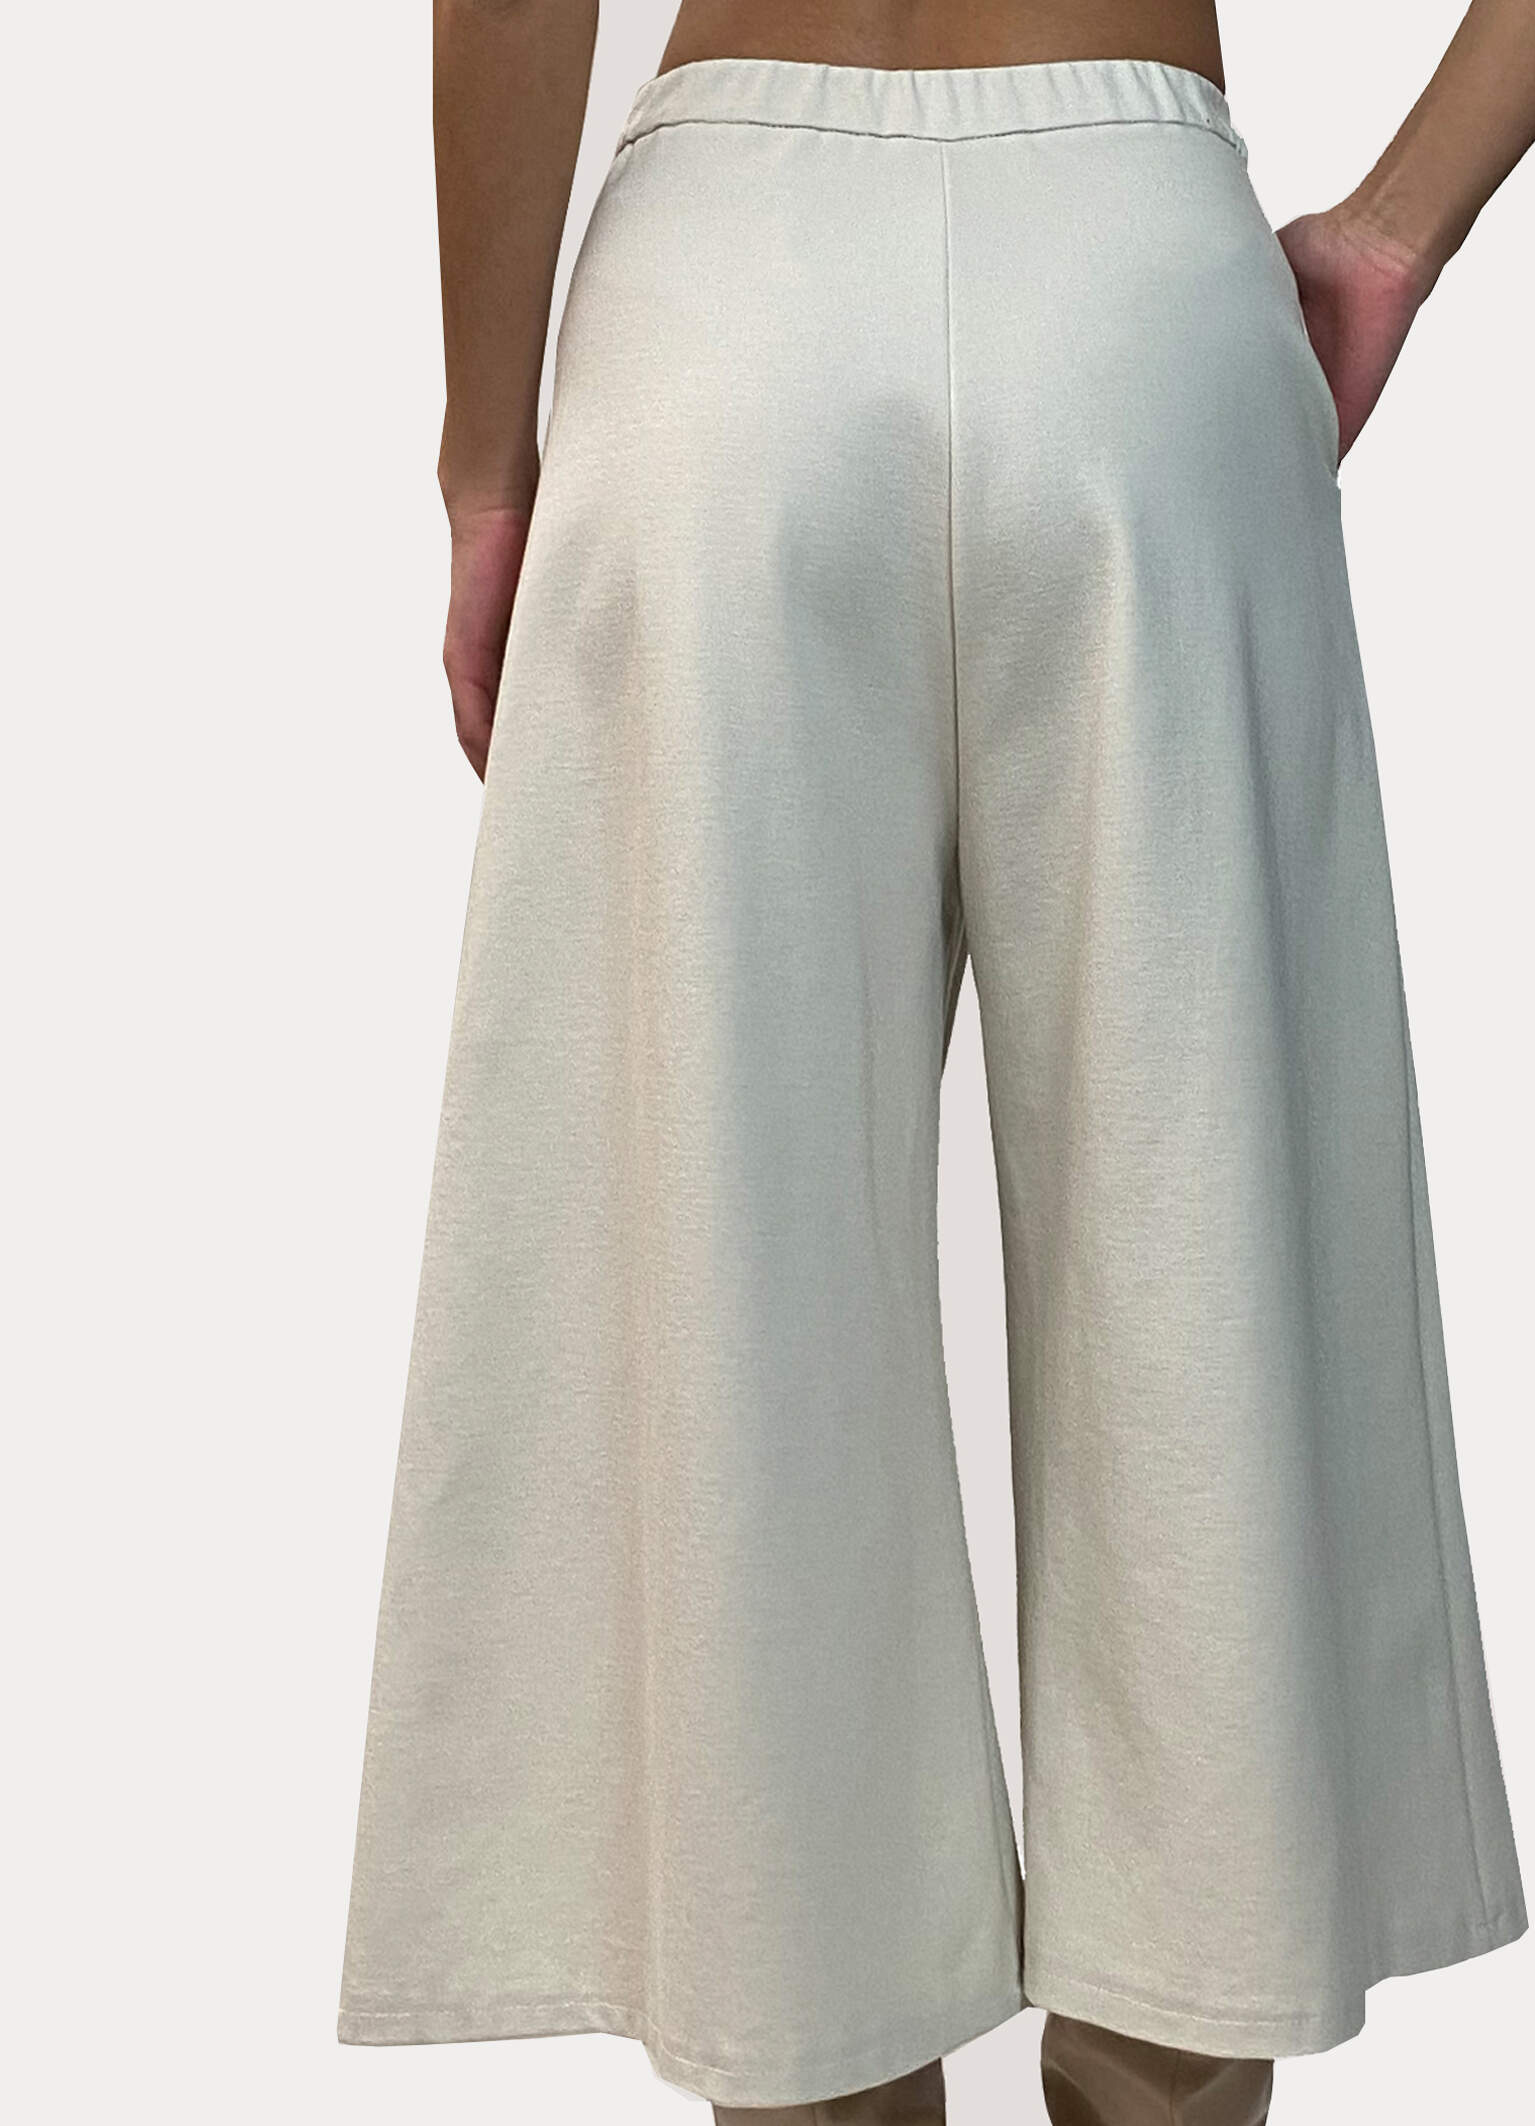 KEANU - pantalone asimmetrico